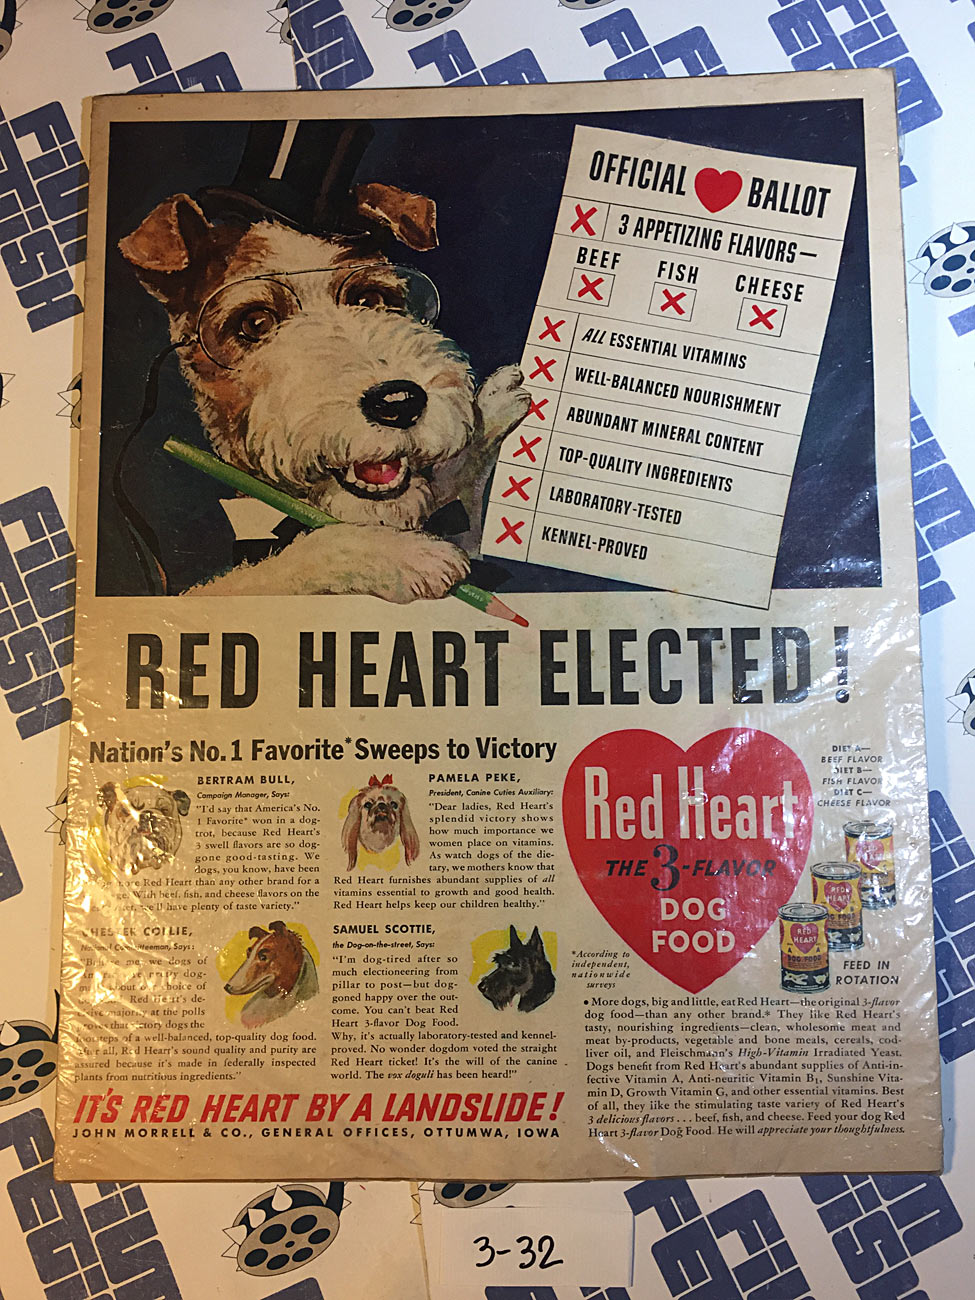 Red Heart 3-Flavor Dog Food Original Full Page Oversized Magazine Advertisement Sheet [332]